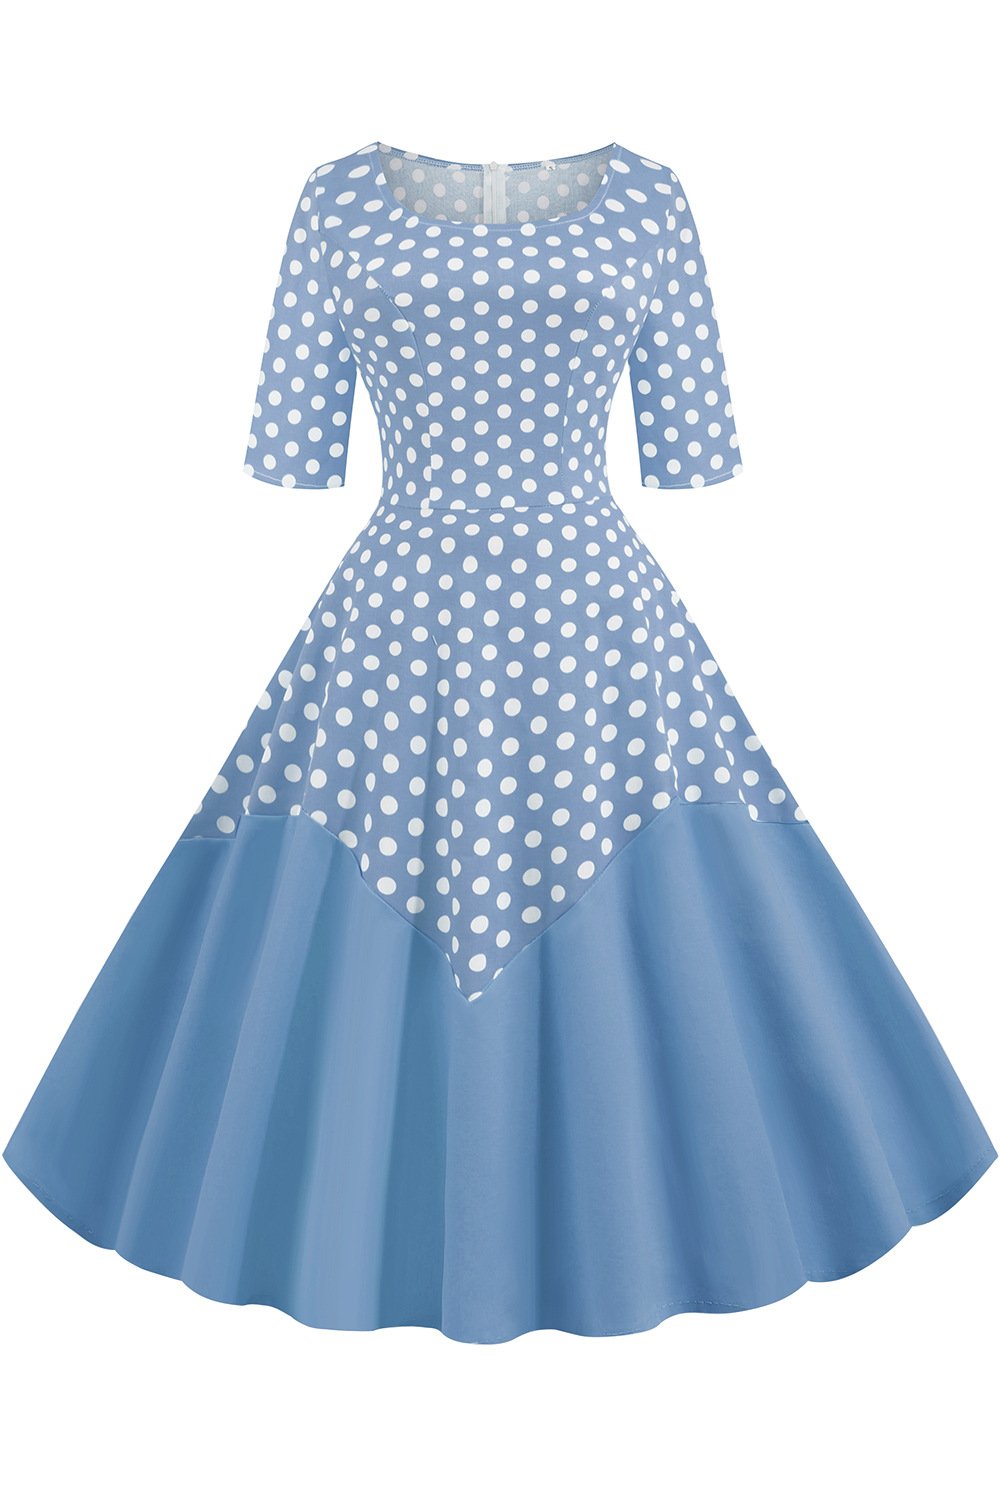 Round Neck Half Sleeves Vintage Dresses-Vintage Dresses-Light Blue-S-Free Shipping at meselling99